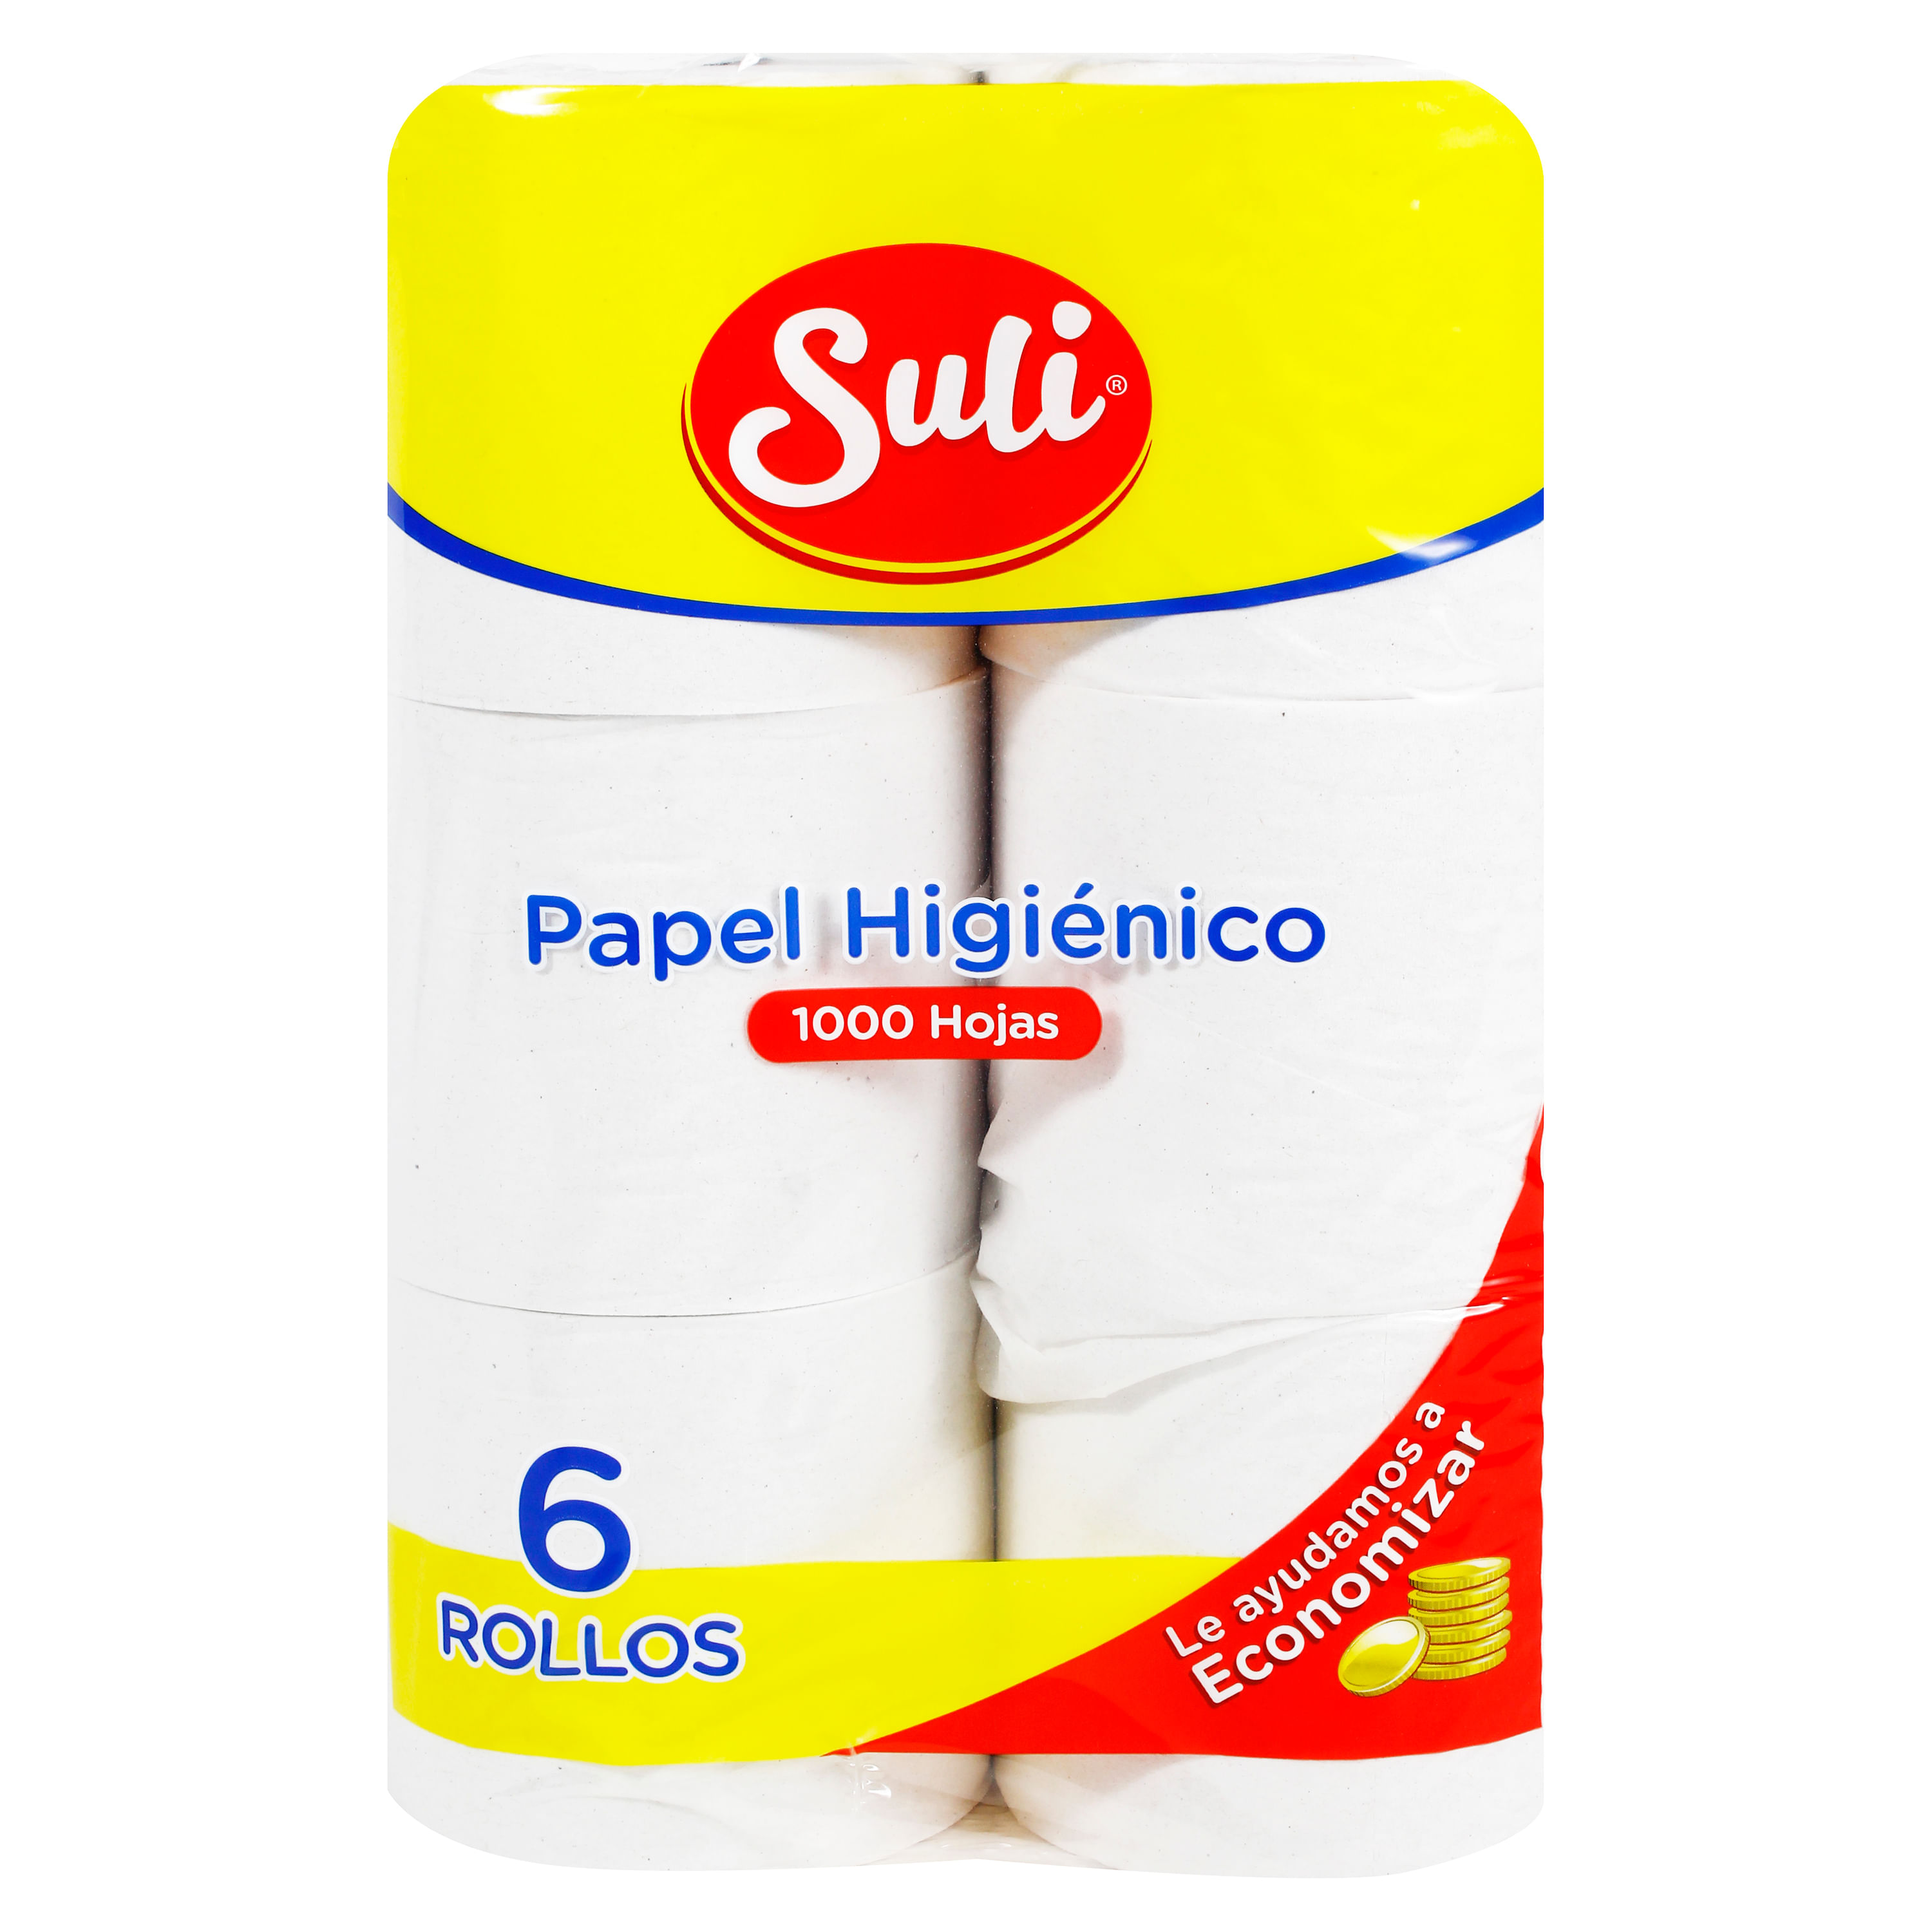 Papel-Higi-nico-Suli-1000-Hojas-6-Rollos-1-55569